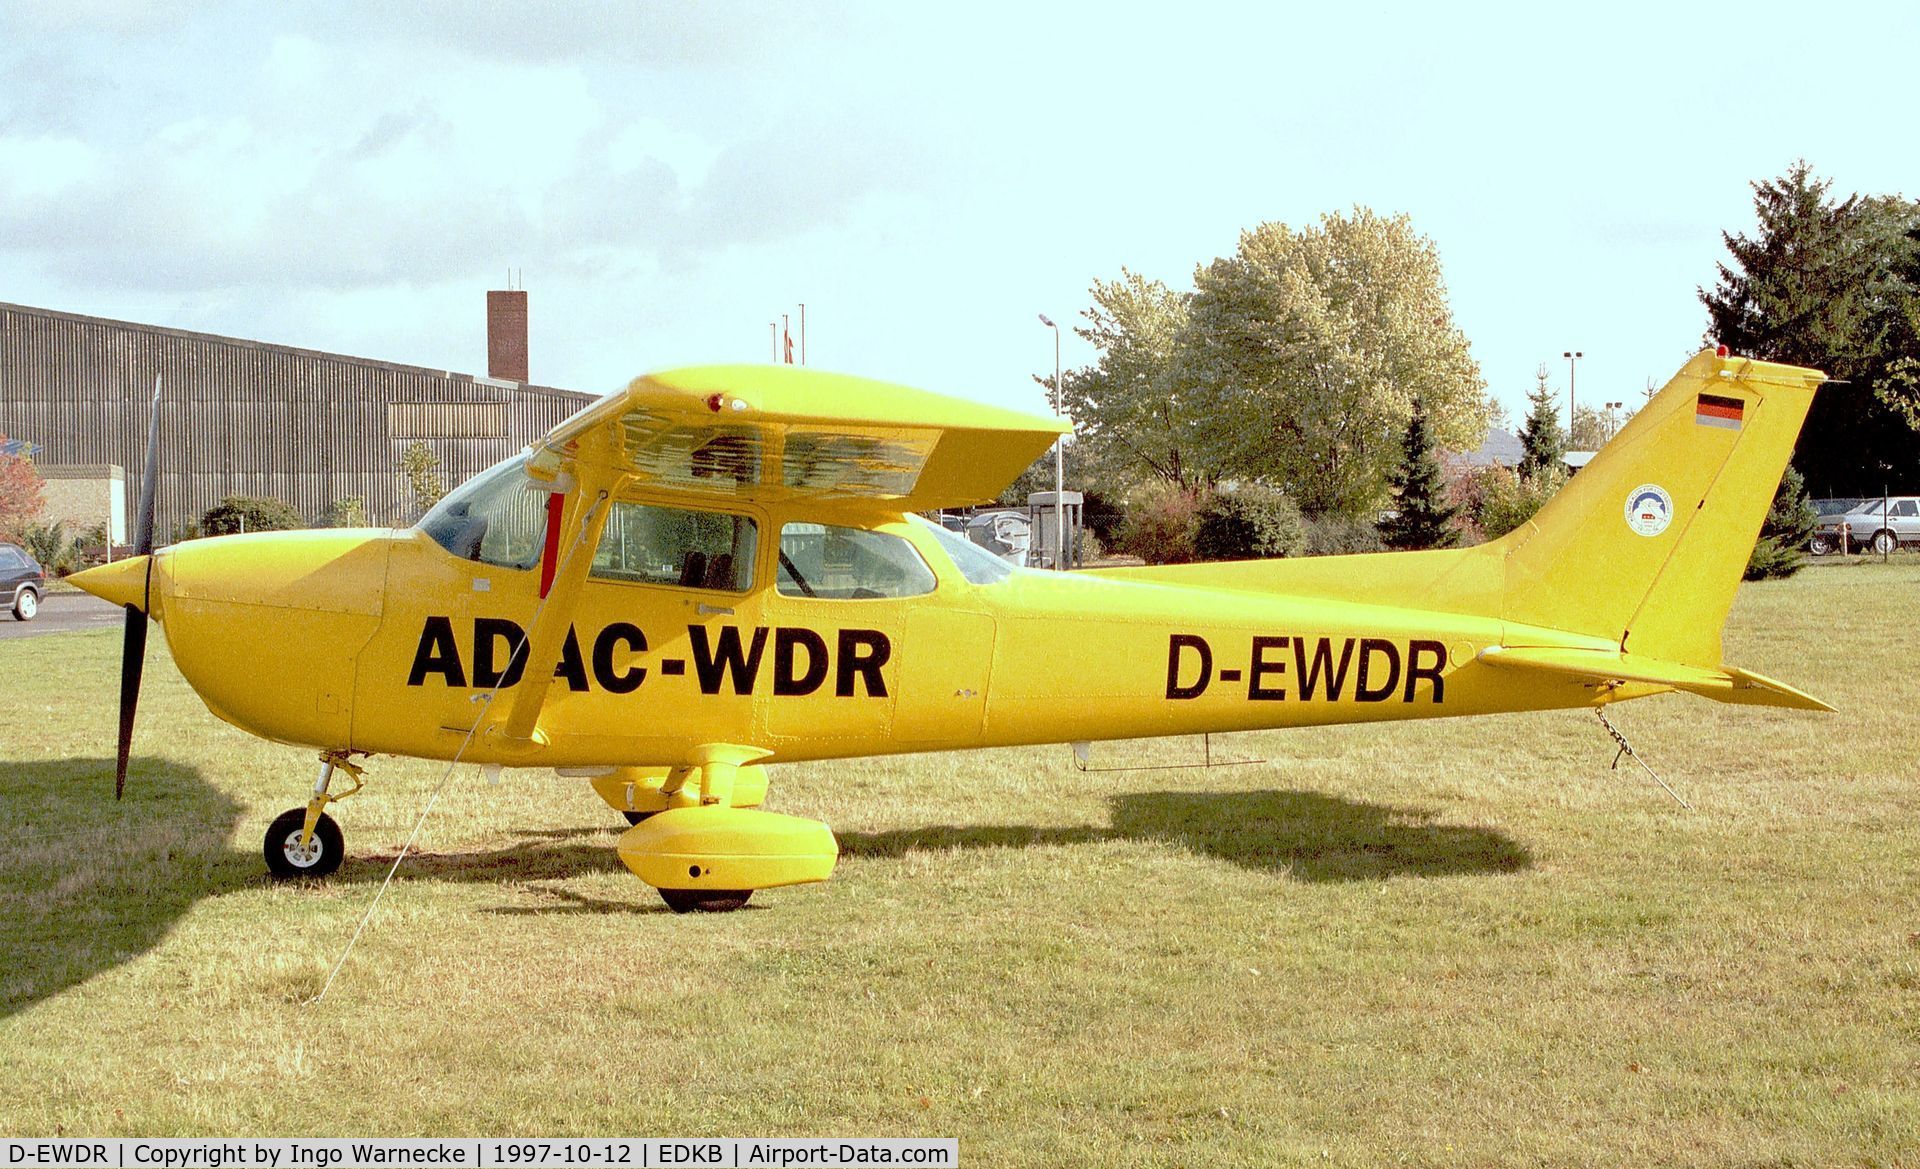 D-EWDR, Cessna 172P C/N 17275322, Cessna 172P Skyhawk operated on behalf of ADAC (german automobile club) and WDR (regional radio broadcasting station) for traffic surveillance from Bonn-Hangelar airfield